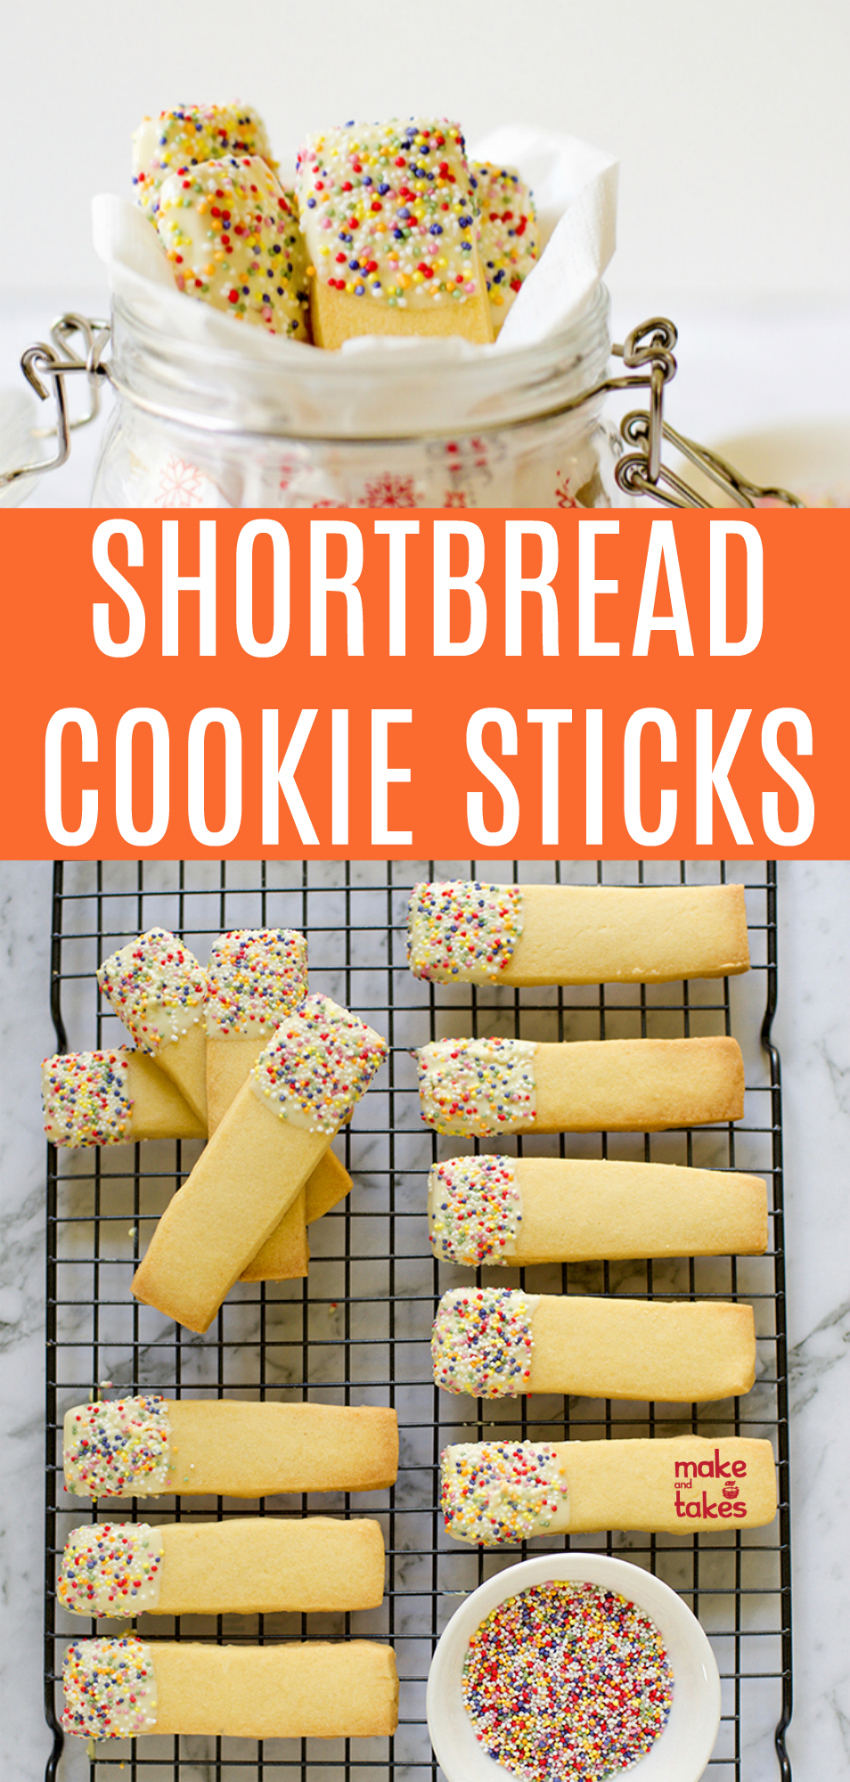 Shortbread Cookie Sticks to make